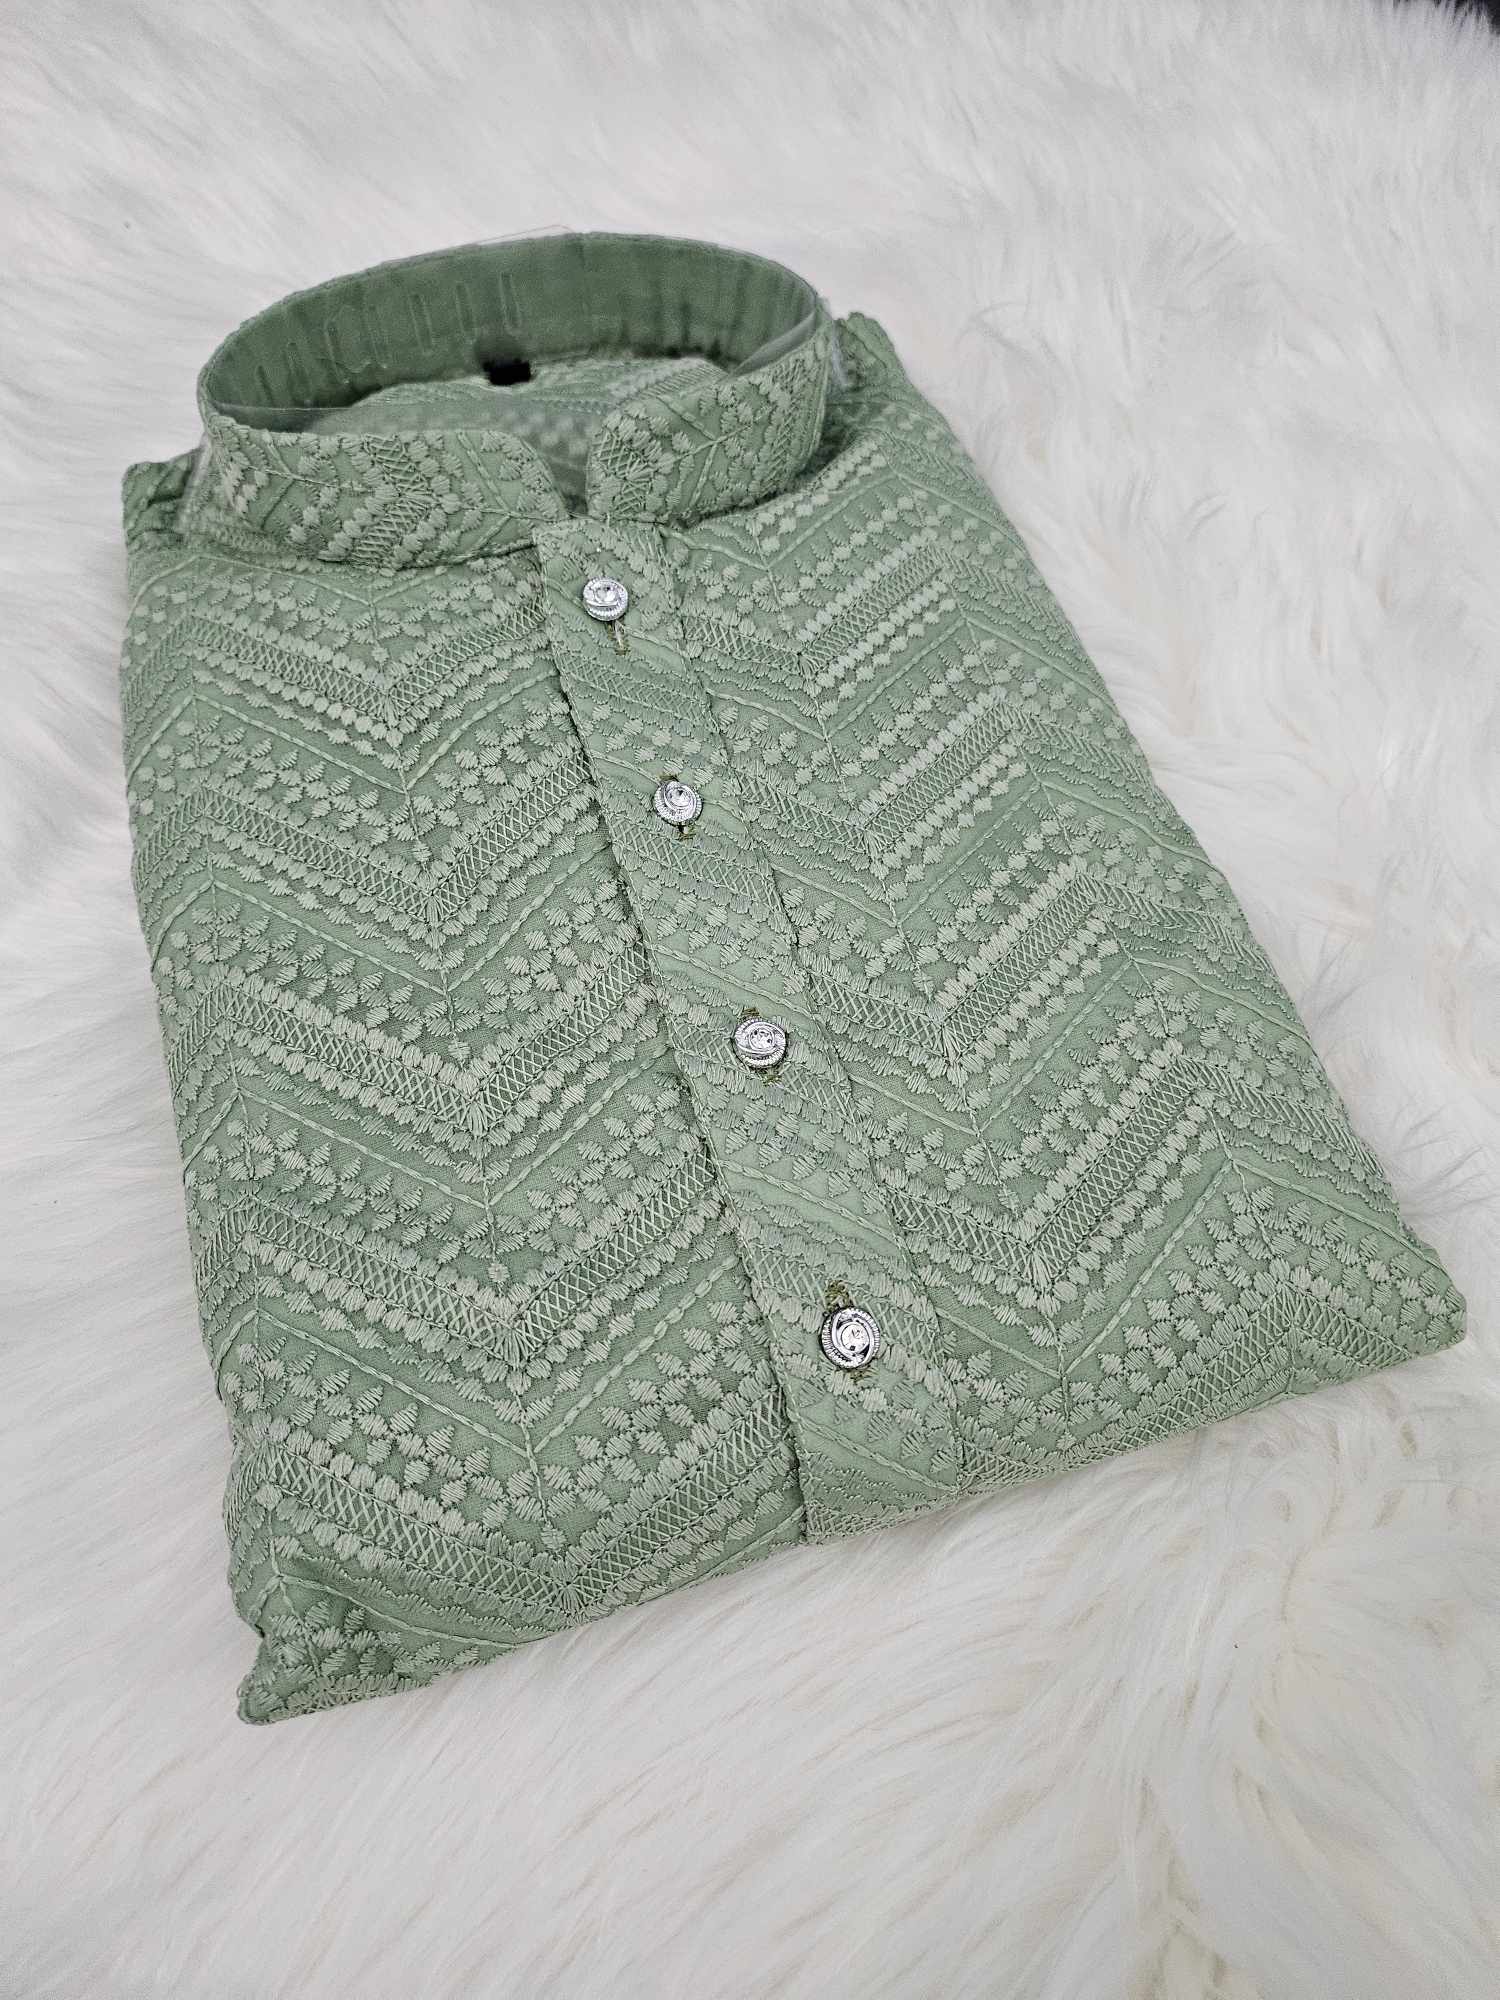 Size 38, Pista Green Shade Kurta Pajama Set, Georgette with Intricate Chikankari Embroidery, KP - 1166